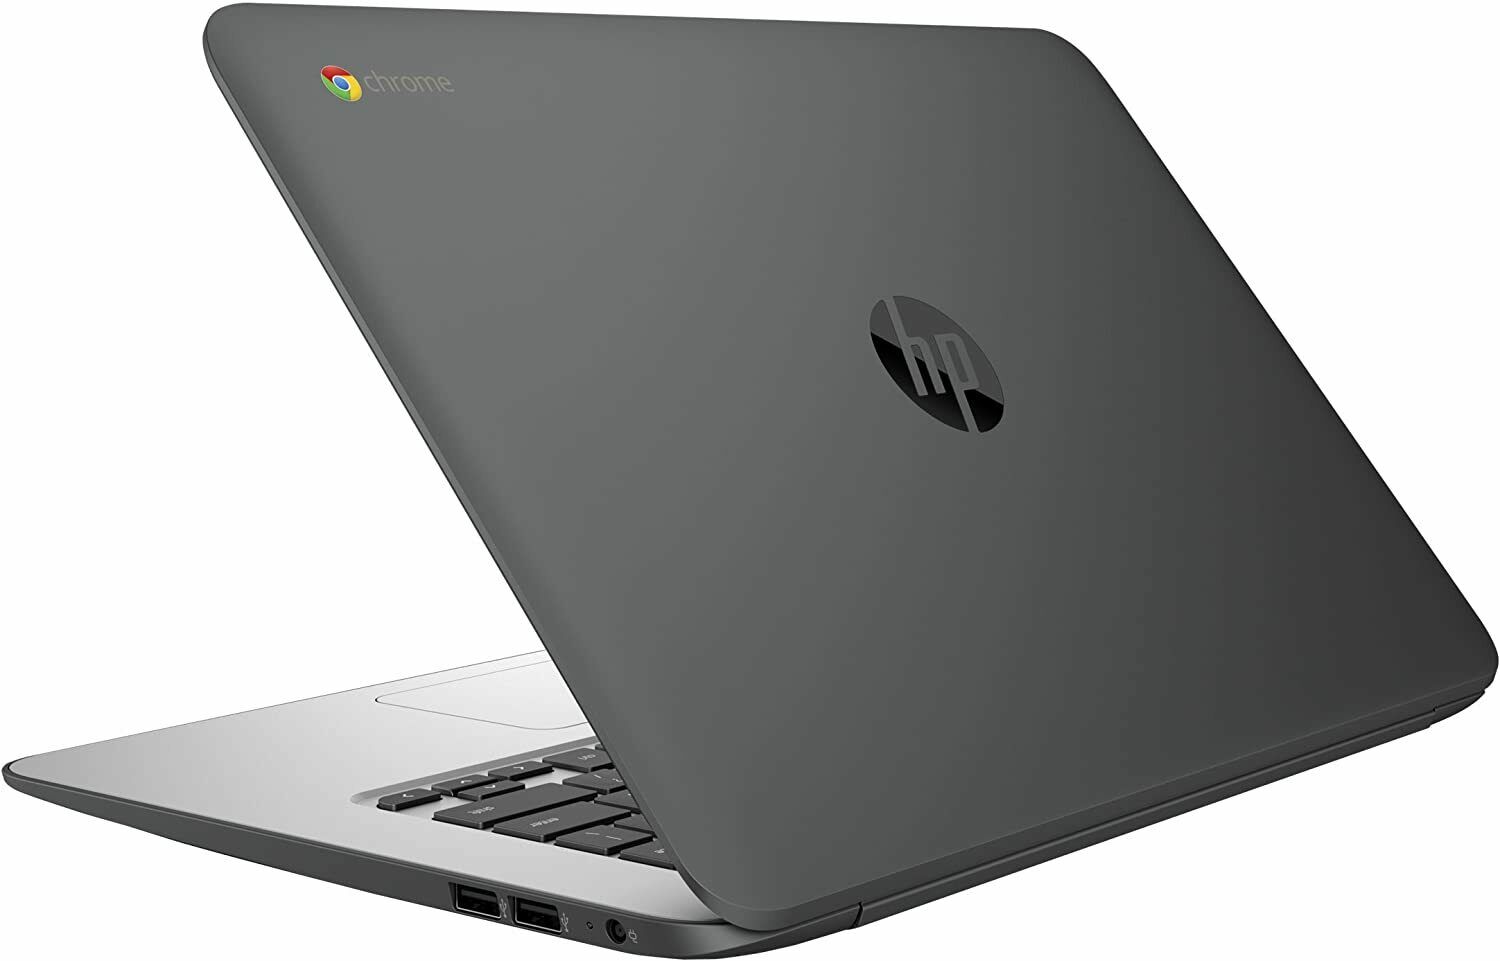 HP Chromebook 14" Laptop Intel Celeron N2840 Processor 2.16GHz 4GB/16GB, T4M32UT